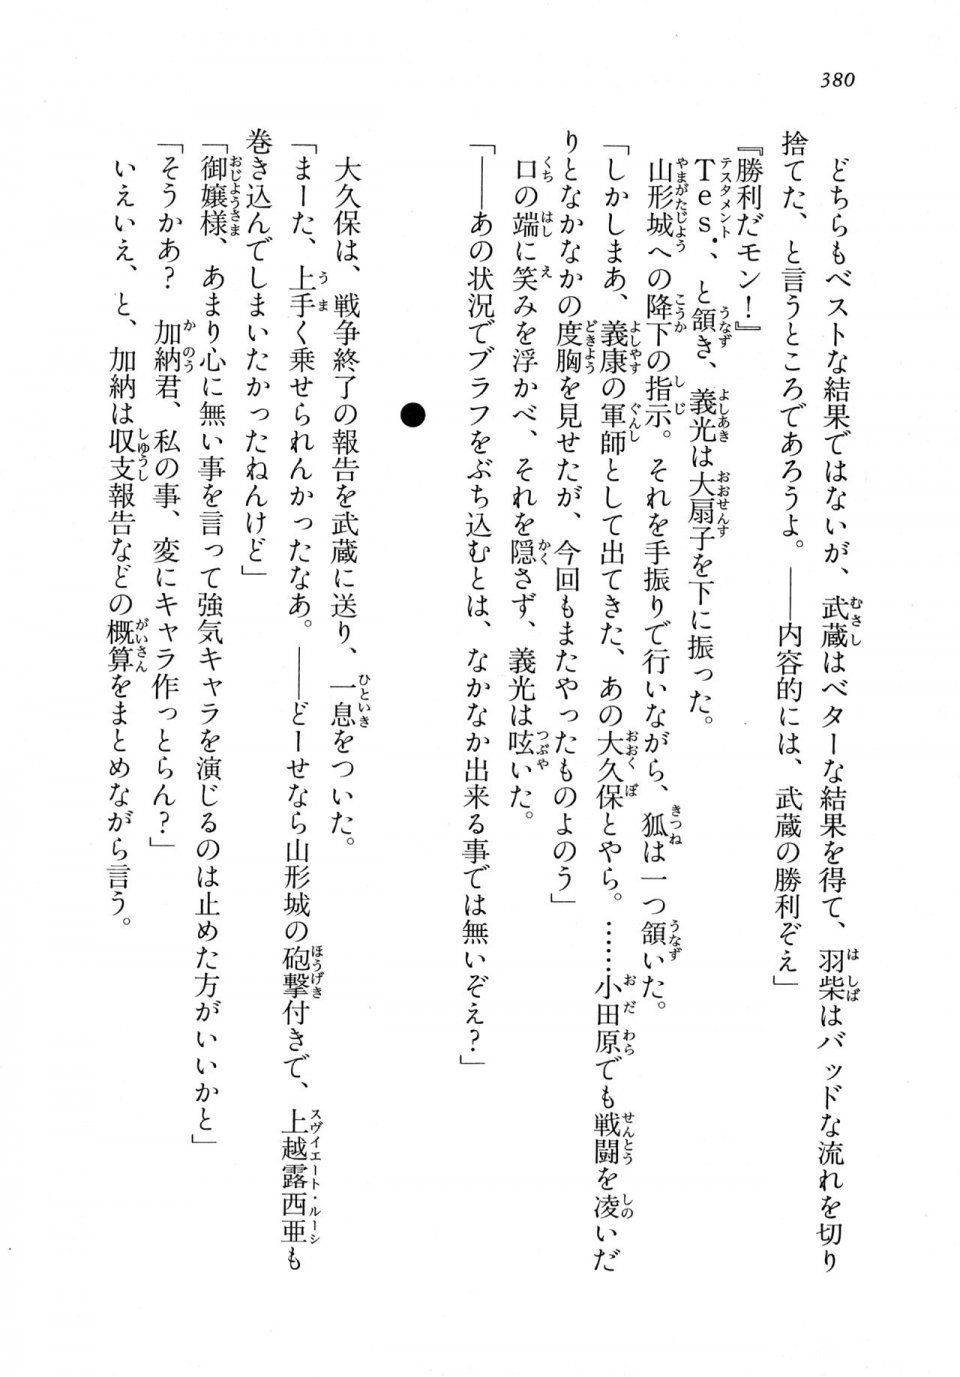 Kyoukai Senjou no Horizon LN Vol 18(7C) Part 1 - Photo #380